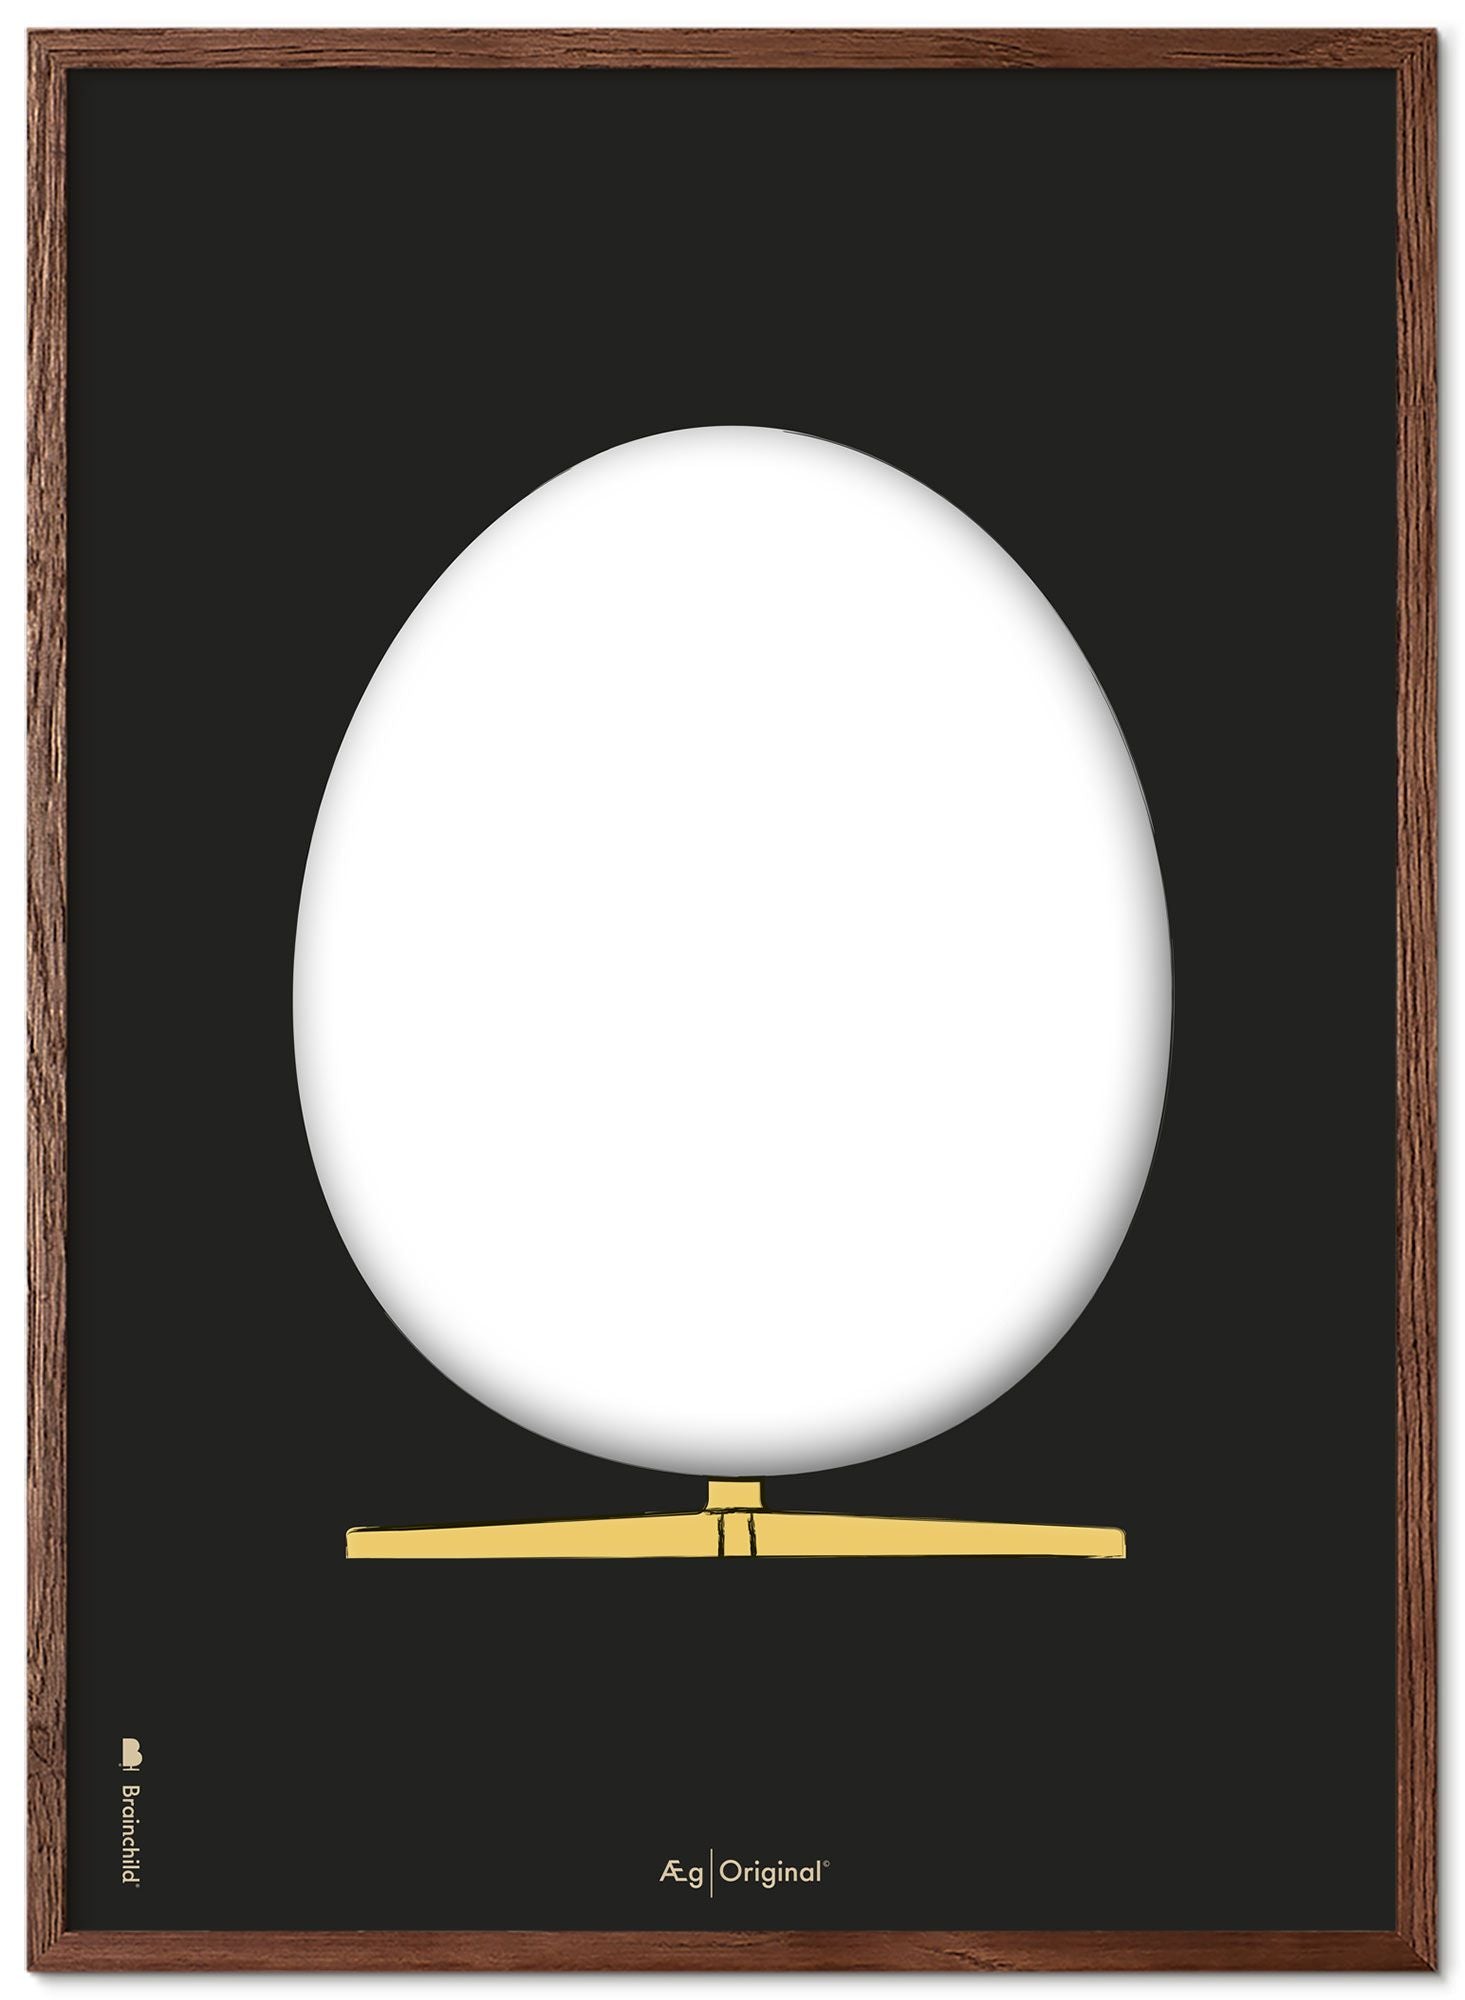 Brainchild The Egg Design Sketch Poster Frame Made Of Dark Wood 30x40 Cm, Black Background